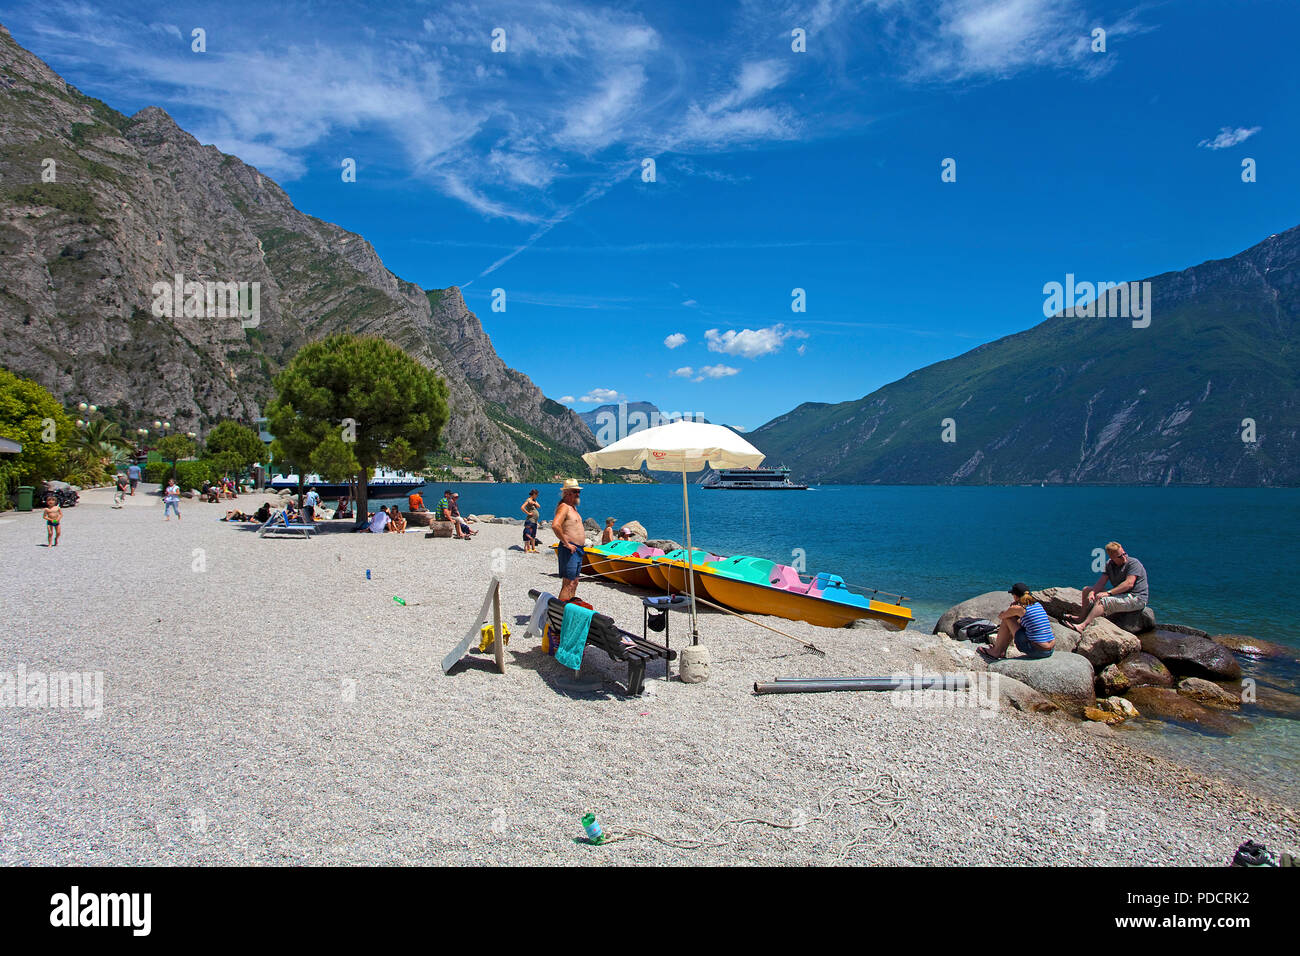 People at the beach of Limone, Limone sul Garda, Garda lake, Lombardy, Italy Stock Photo